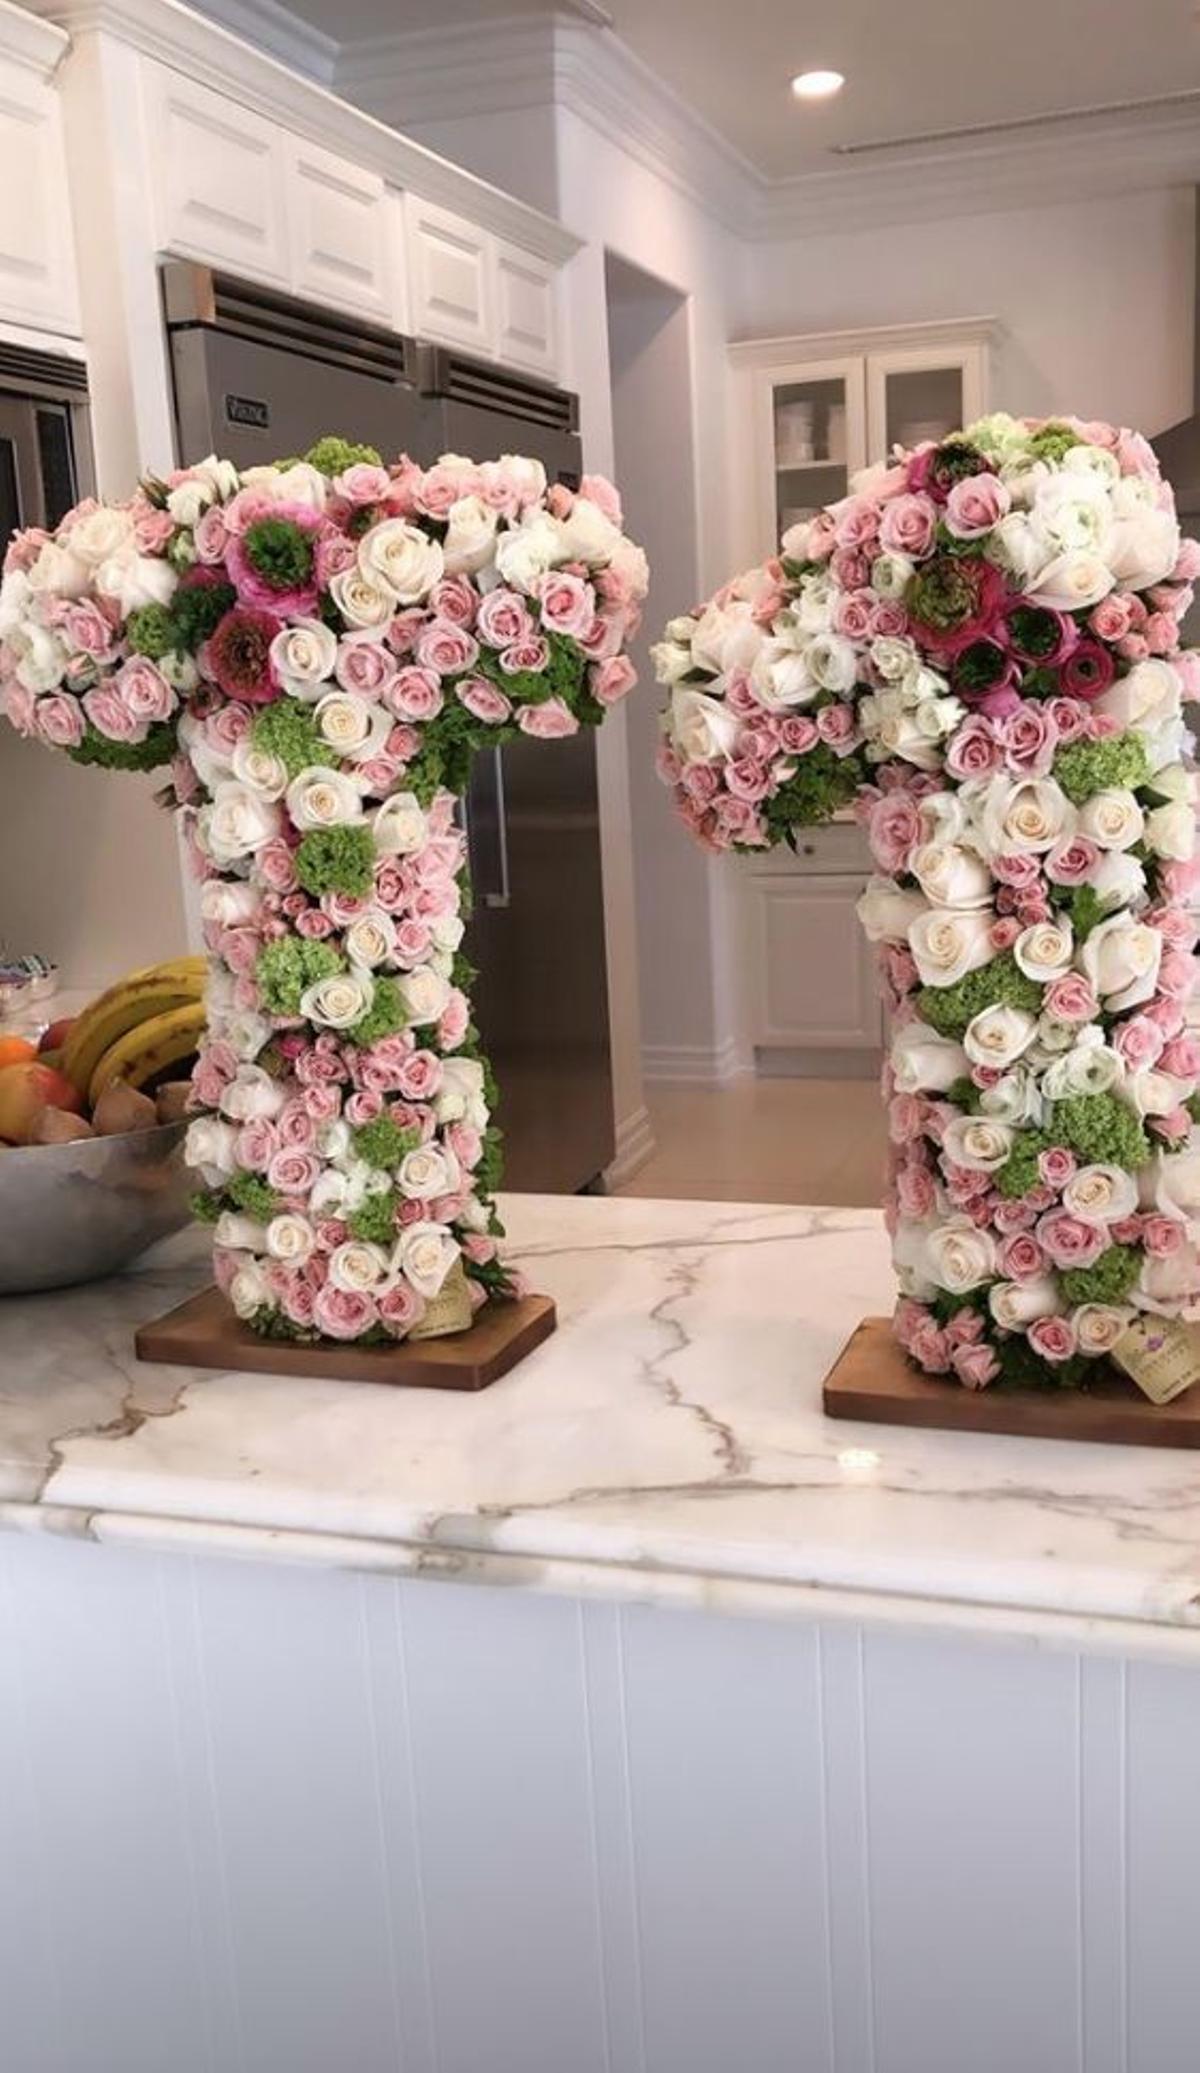 Detalles florales de la fiesta de True, la hija de Khloé Kardashian